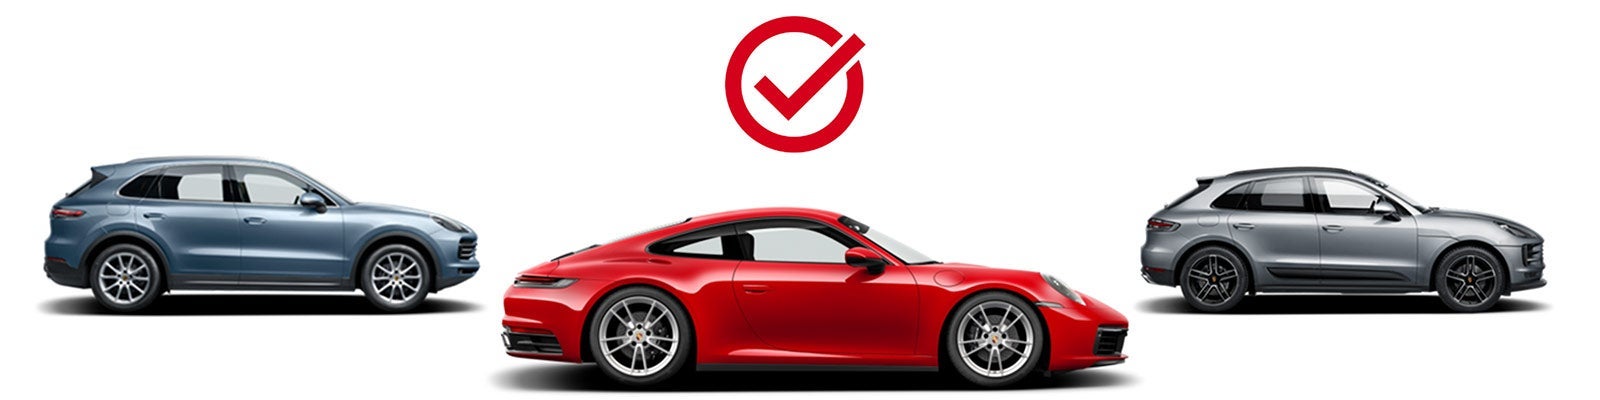 Choose Your Porsche | Porsche Greensboro in Greensboro NC